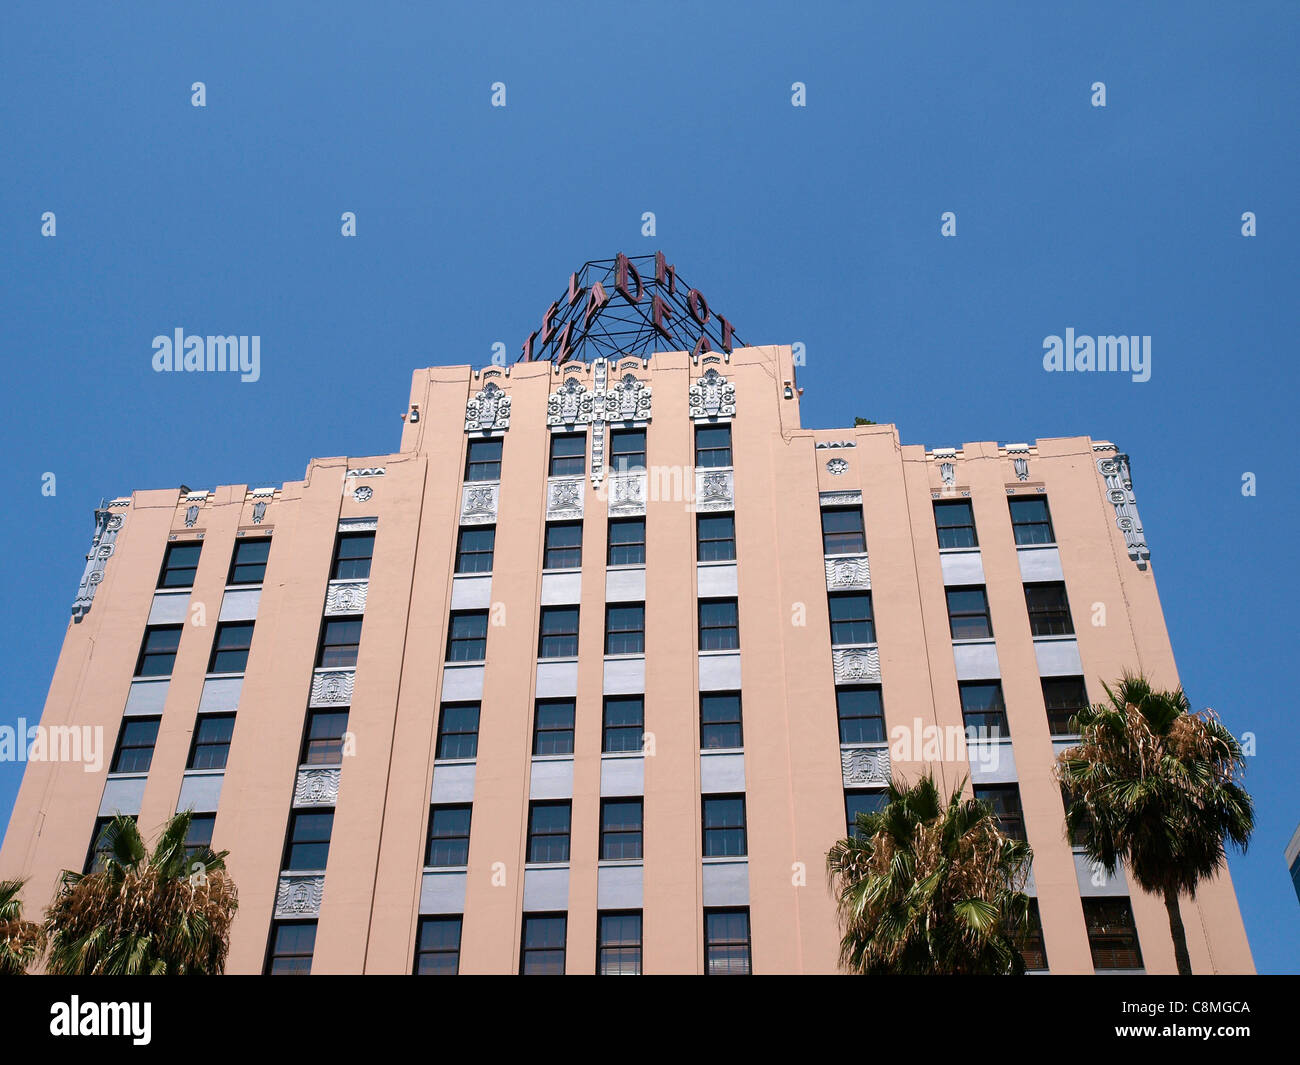 The Hotel De Anza historic hotel in San Jose, California, incorporating Art Deco, Mission and Spanish Revival architectural styles. Stock Photo